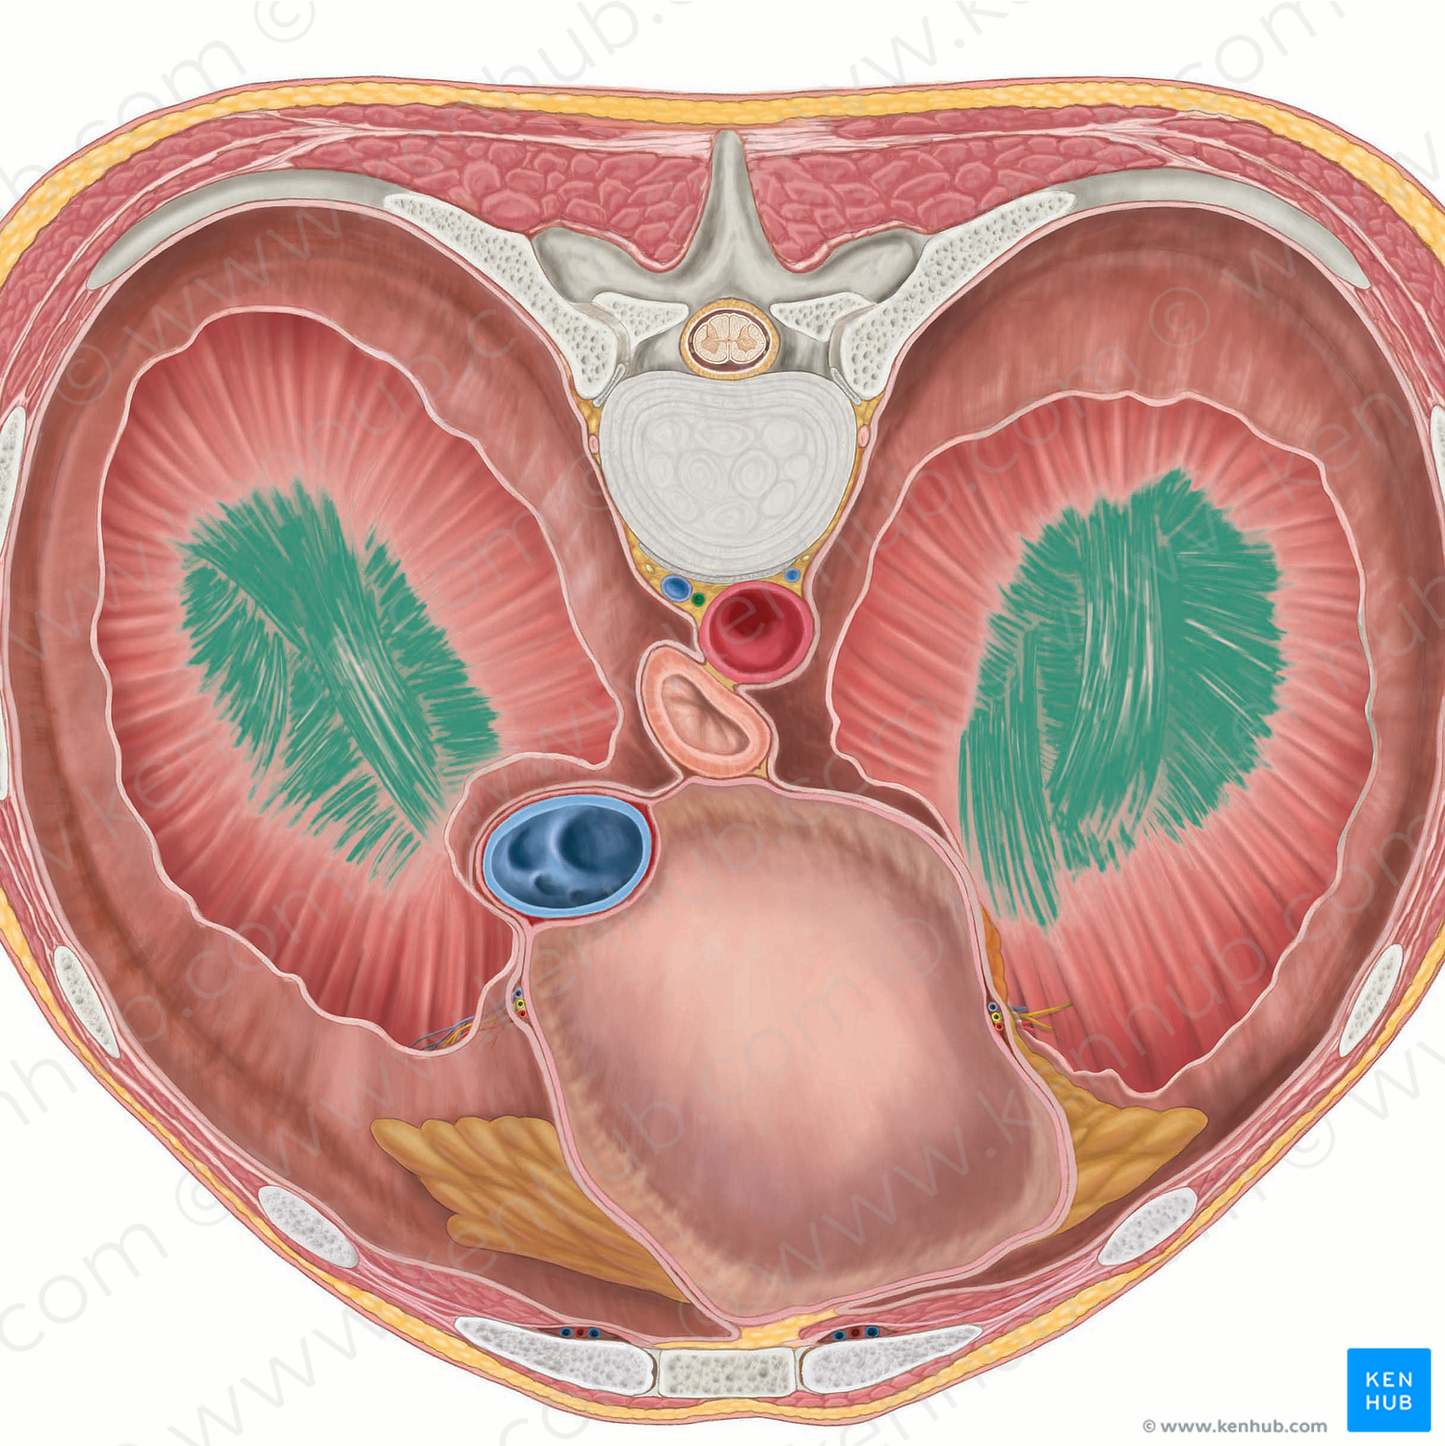 Central tendon of diaphragm (#2553)